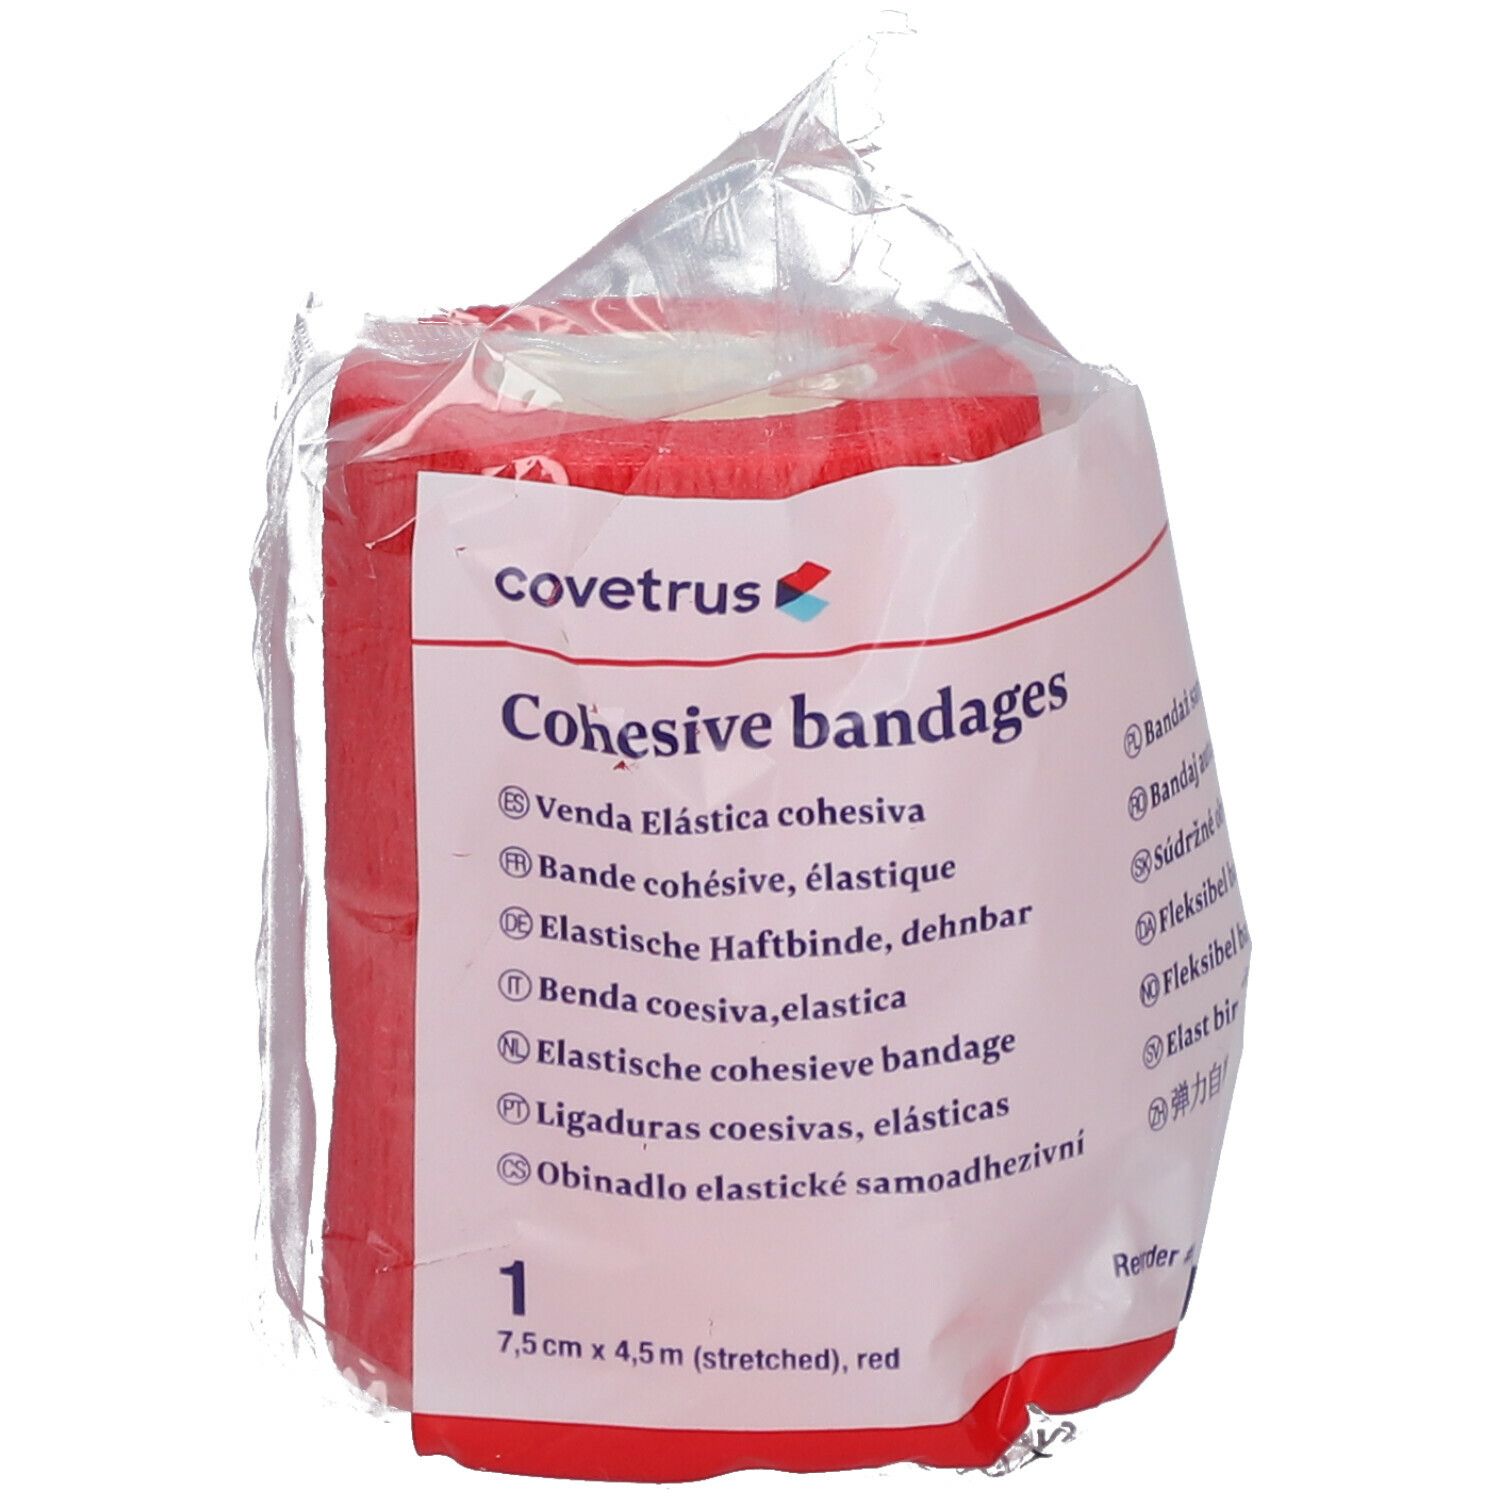 covetrus Cohesive bandages 7,5cm x 4,5m red